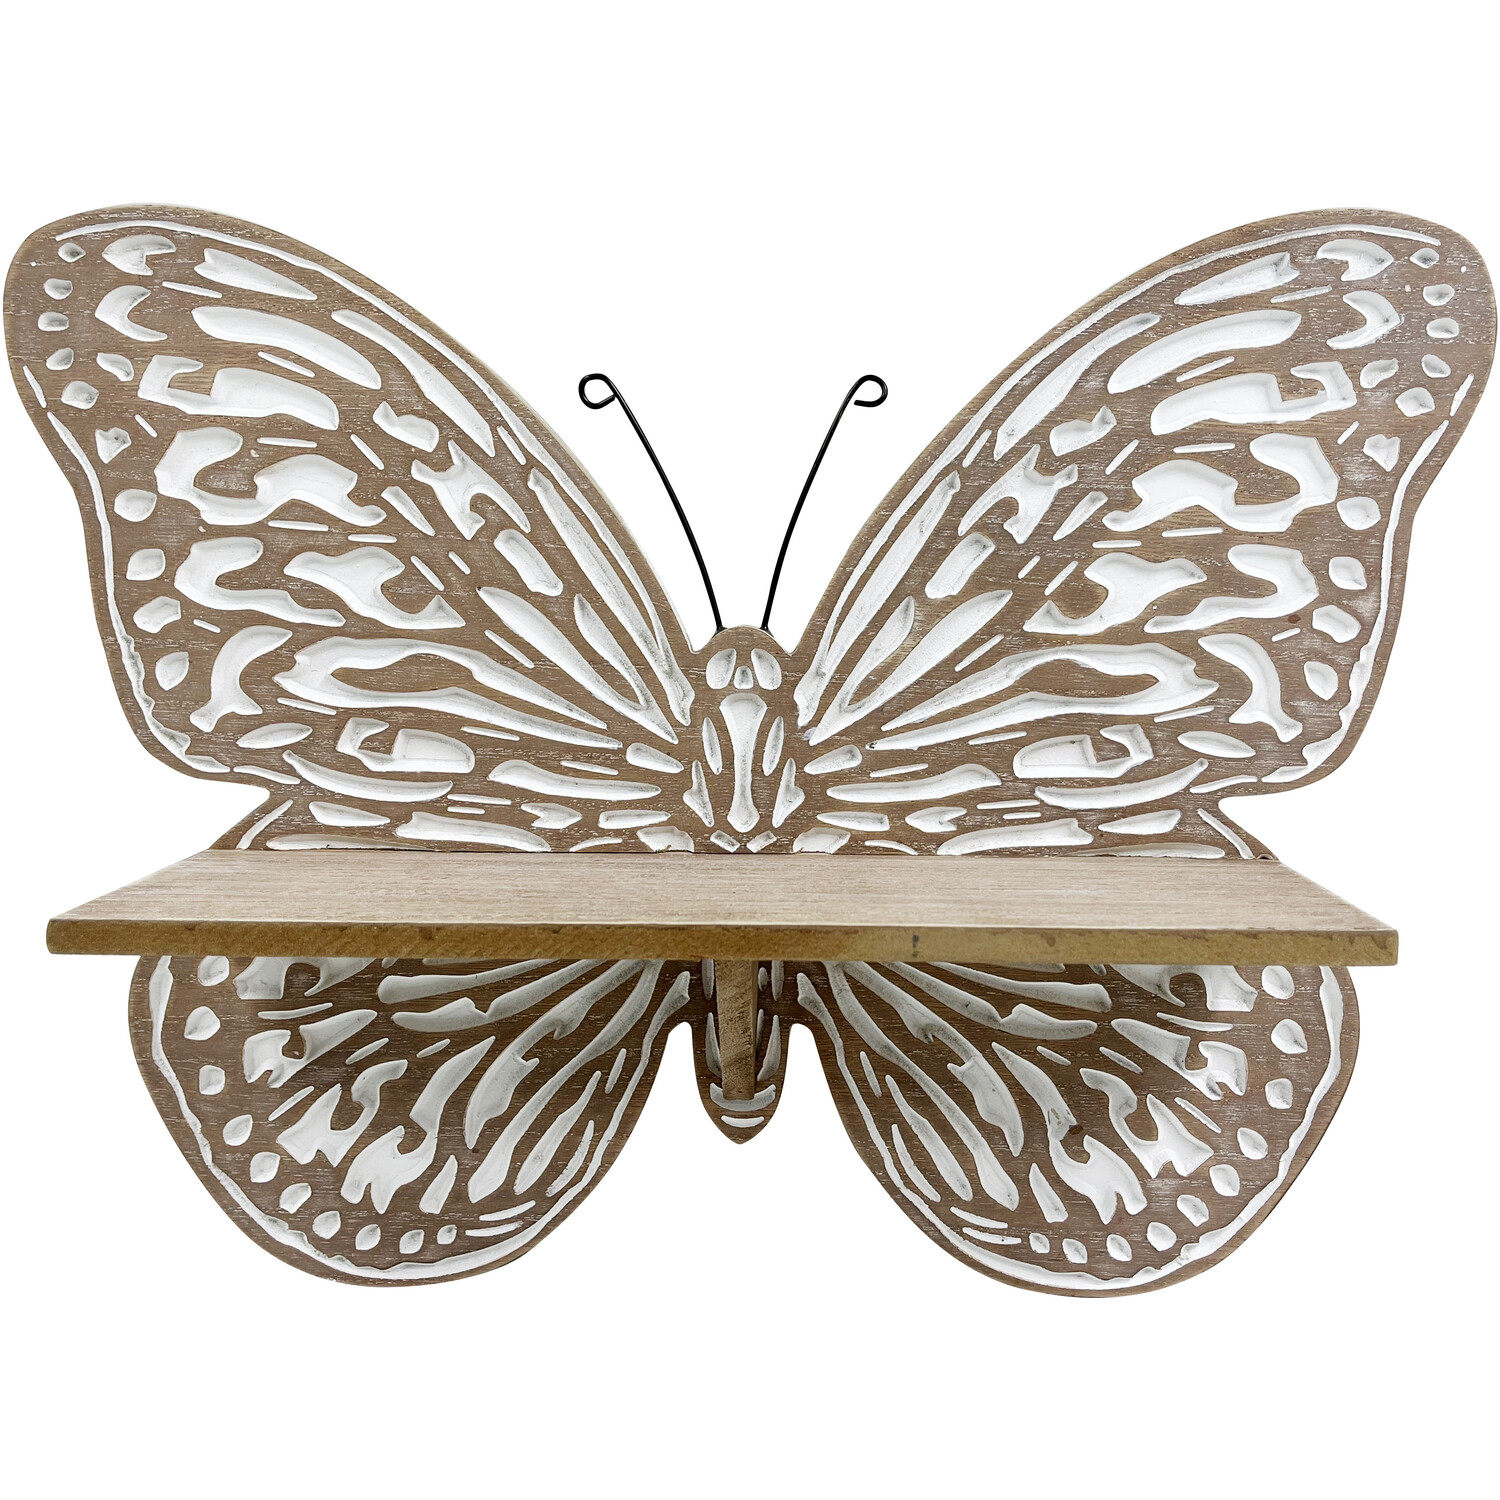 Wood Effect Butterfly Shelf - Brown Image 1